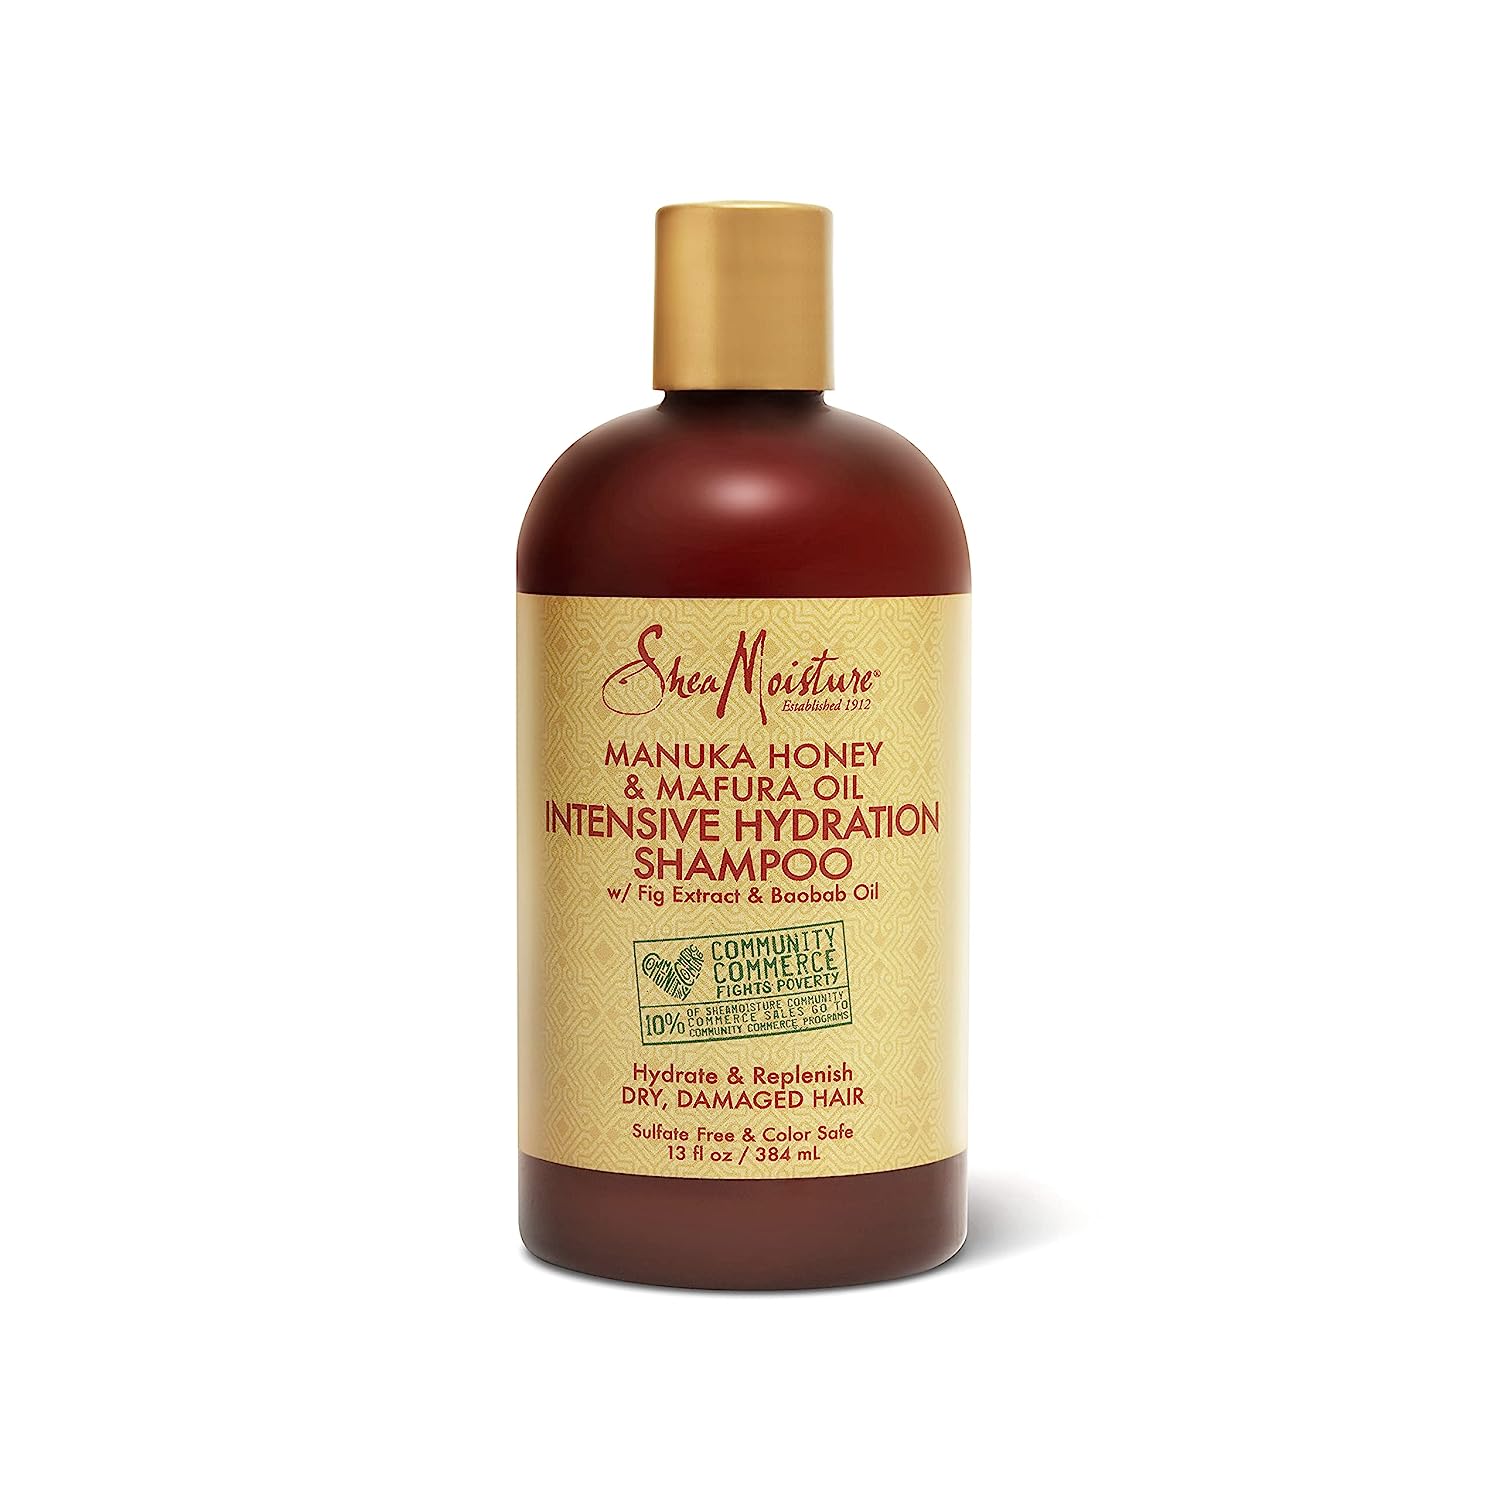 moisturizing shampoo product comparison